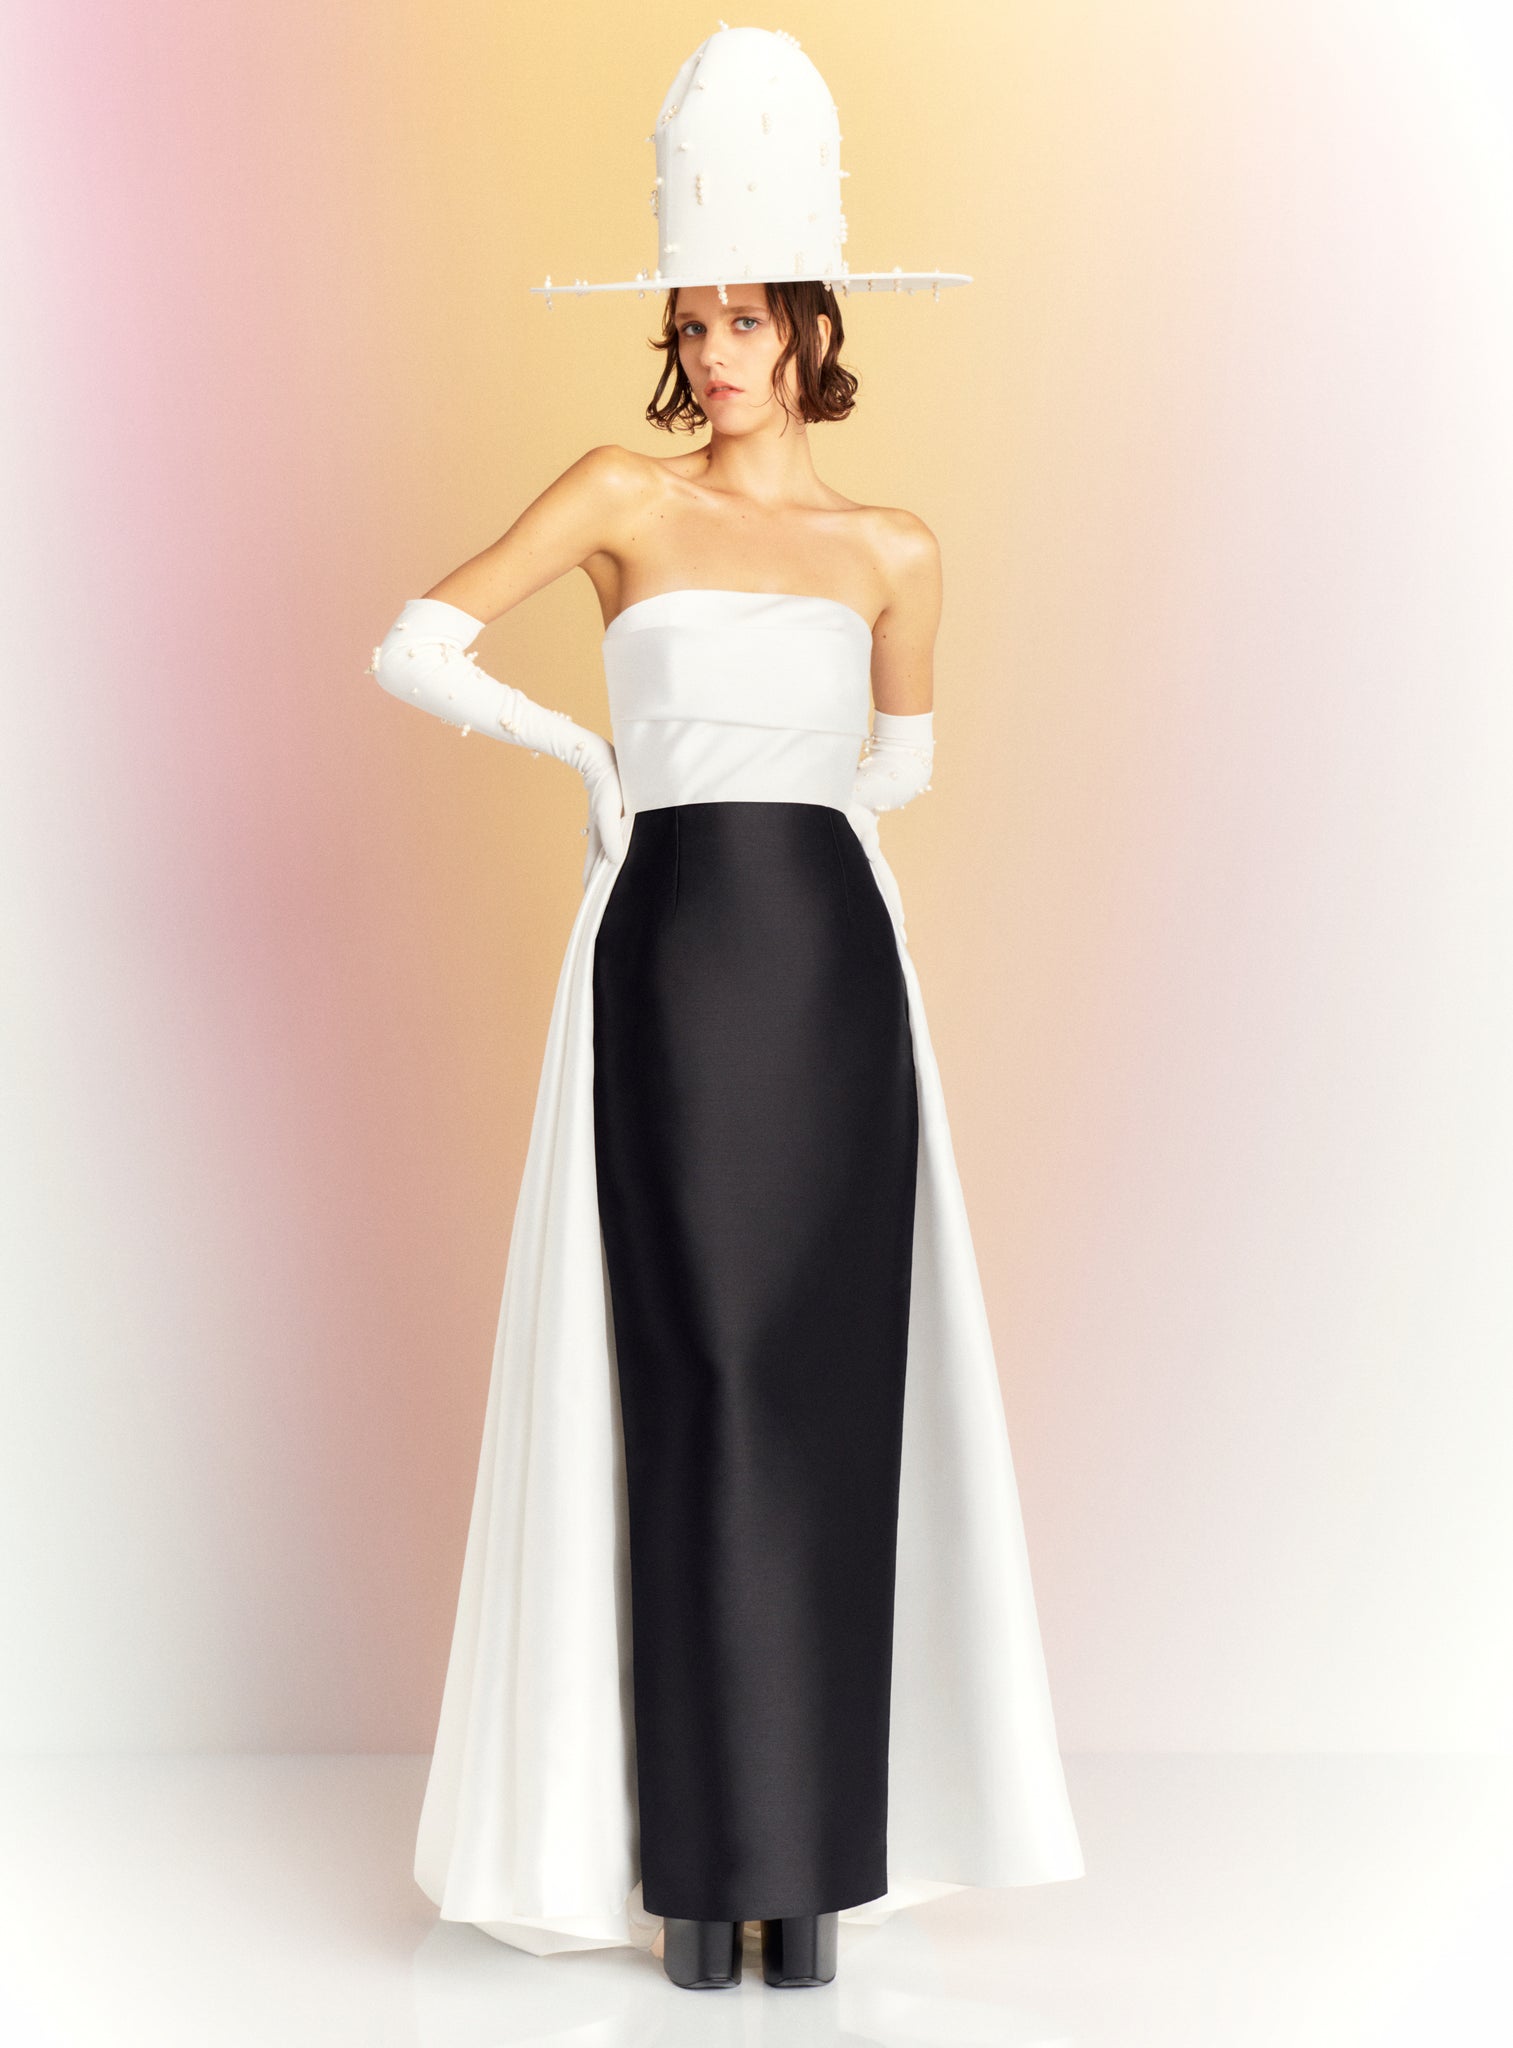 The Tiffany Maxi Dress in Cream and Black